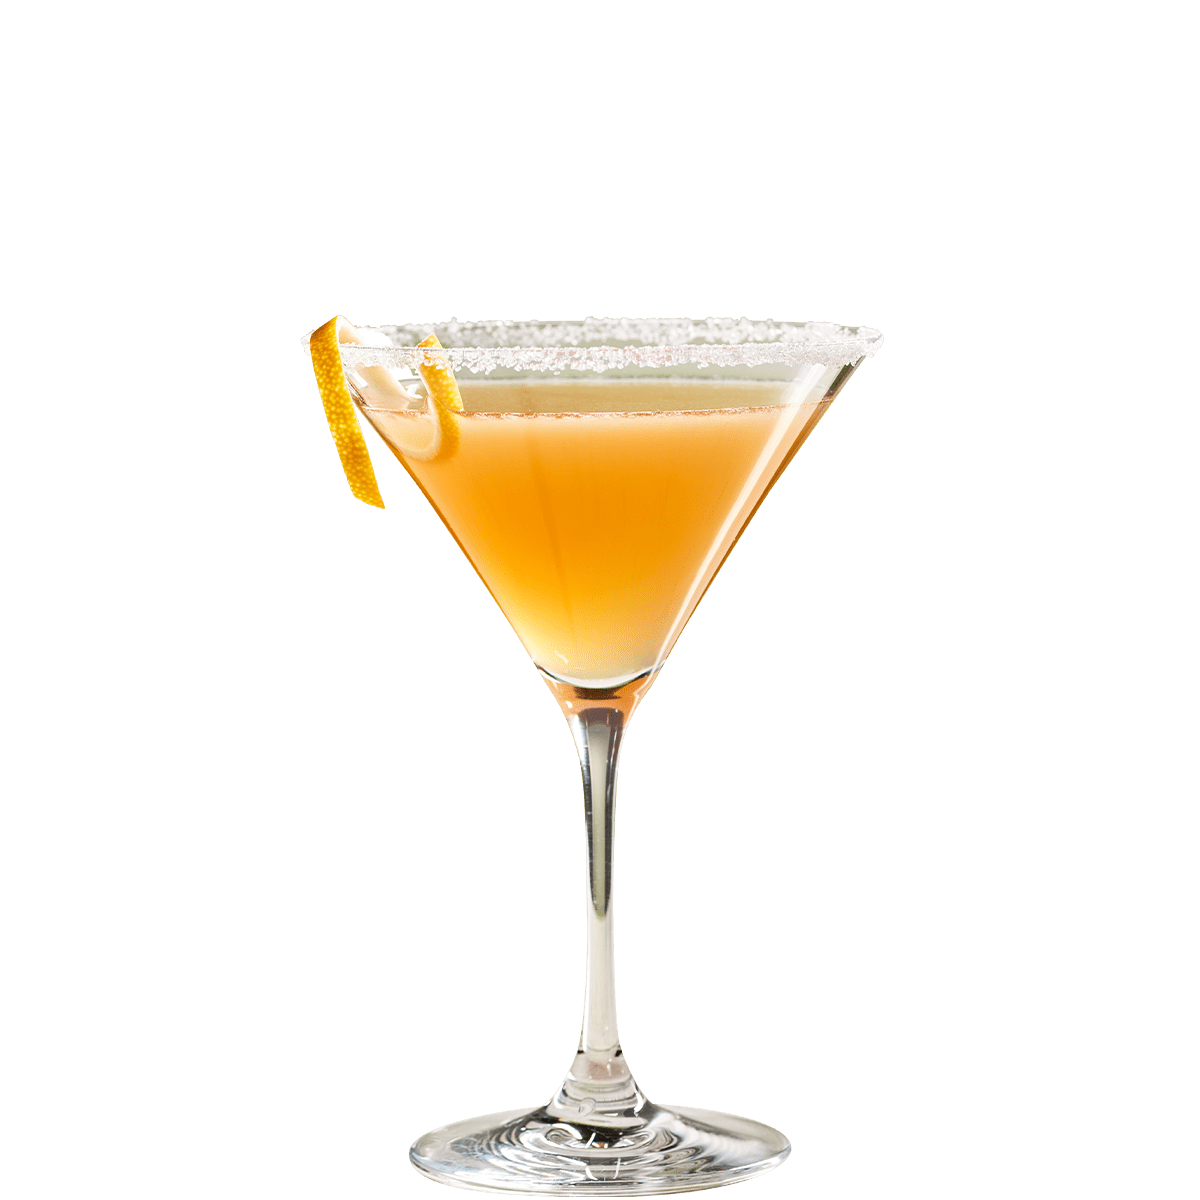 Sidecar in a martini glass